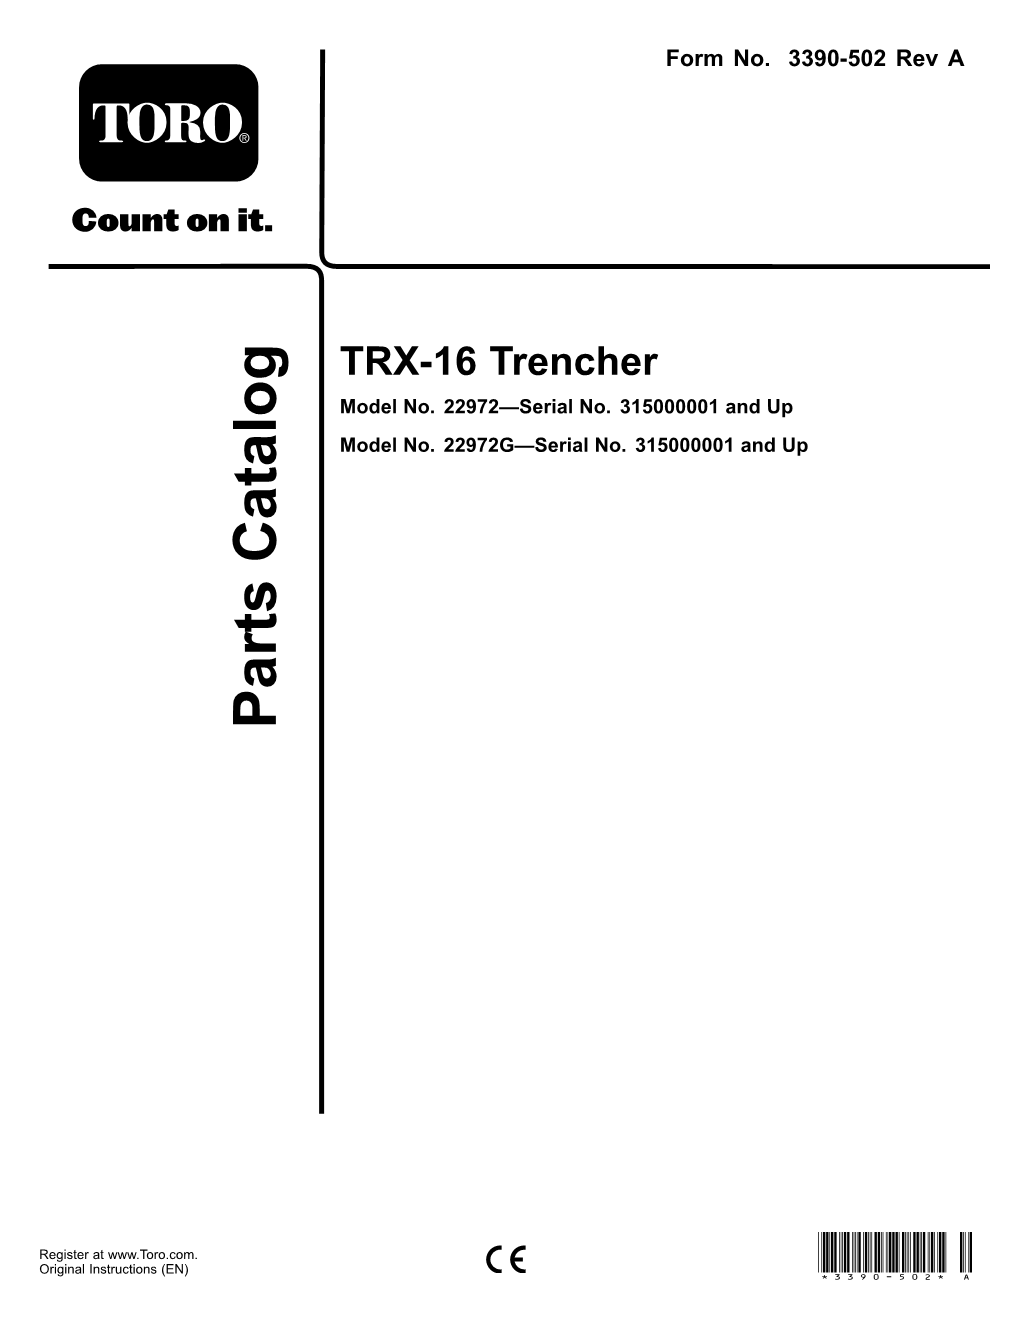 TRX-16 Trencher Model No